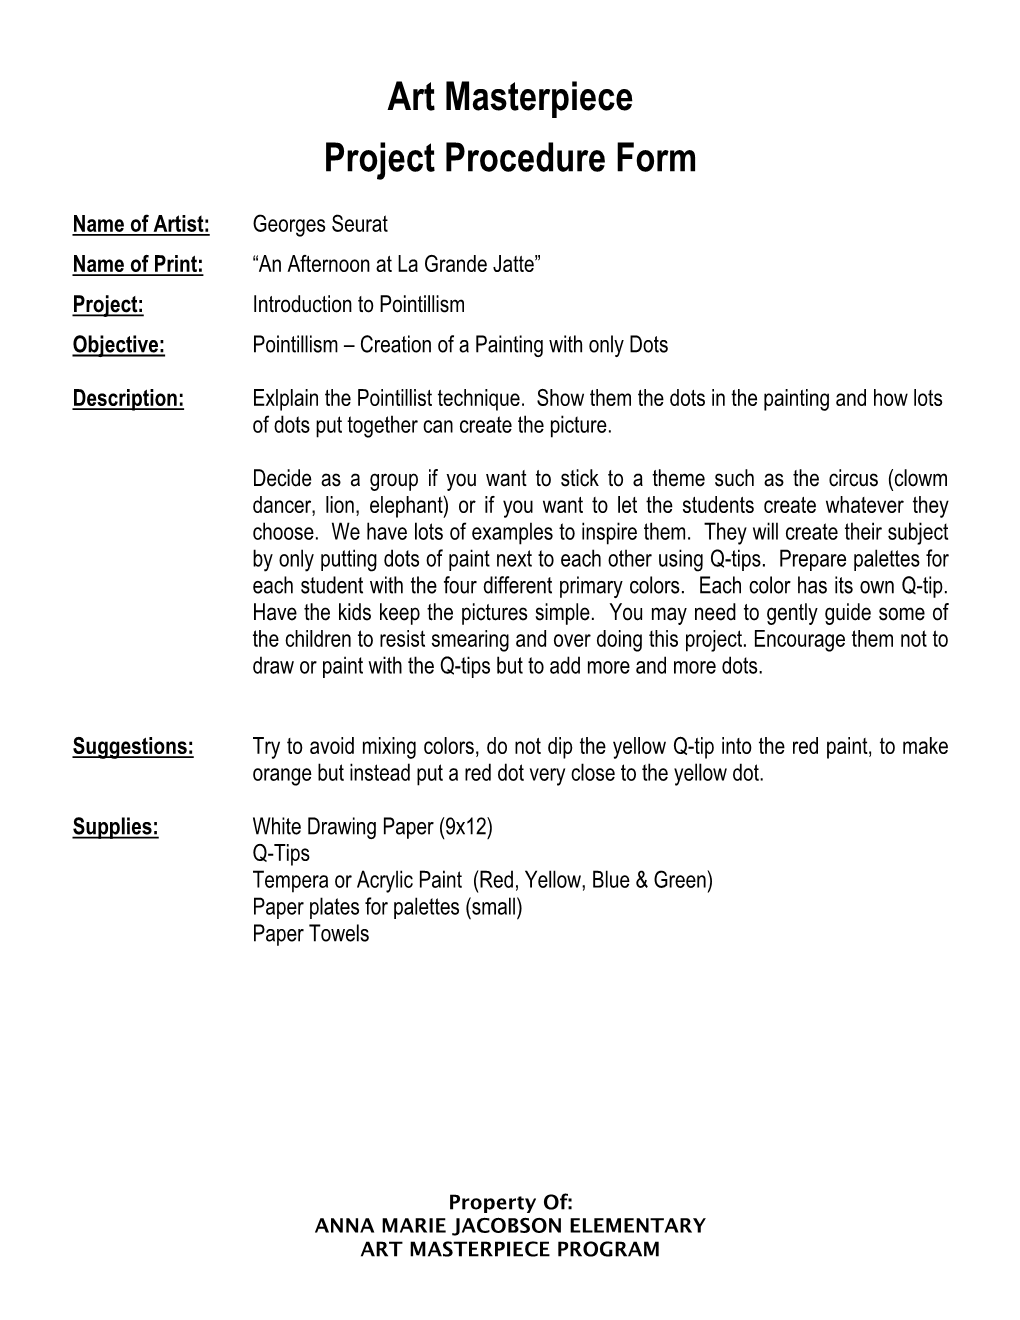 Art Masterpiece Project Procedure Form